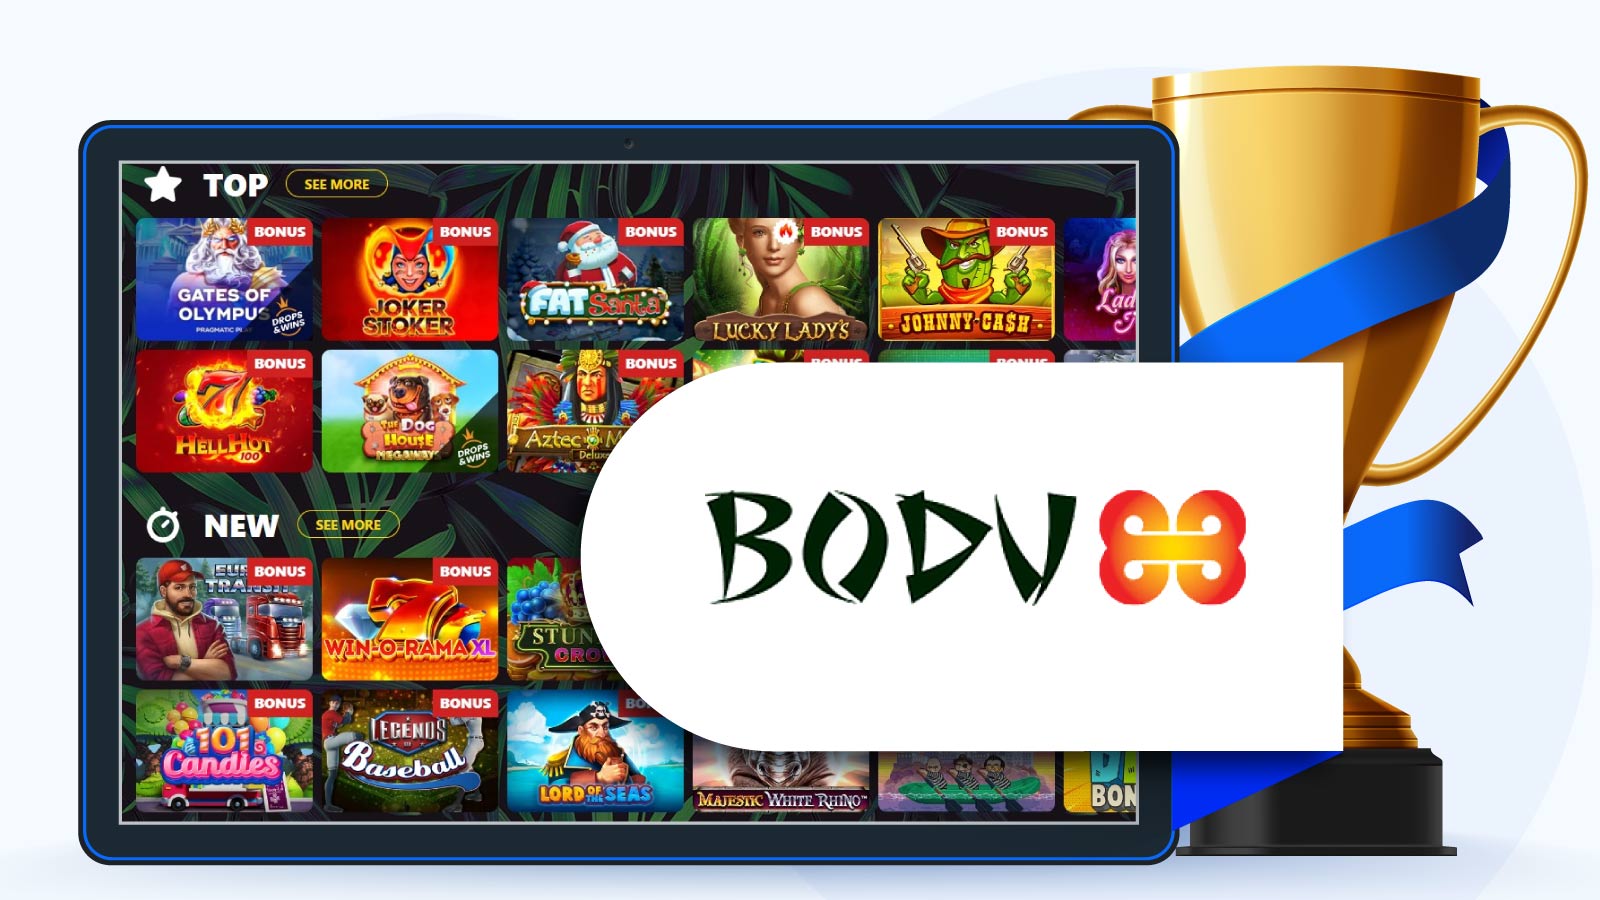 Best Online Casino with 400% Bonus: Bodu88 Casino